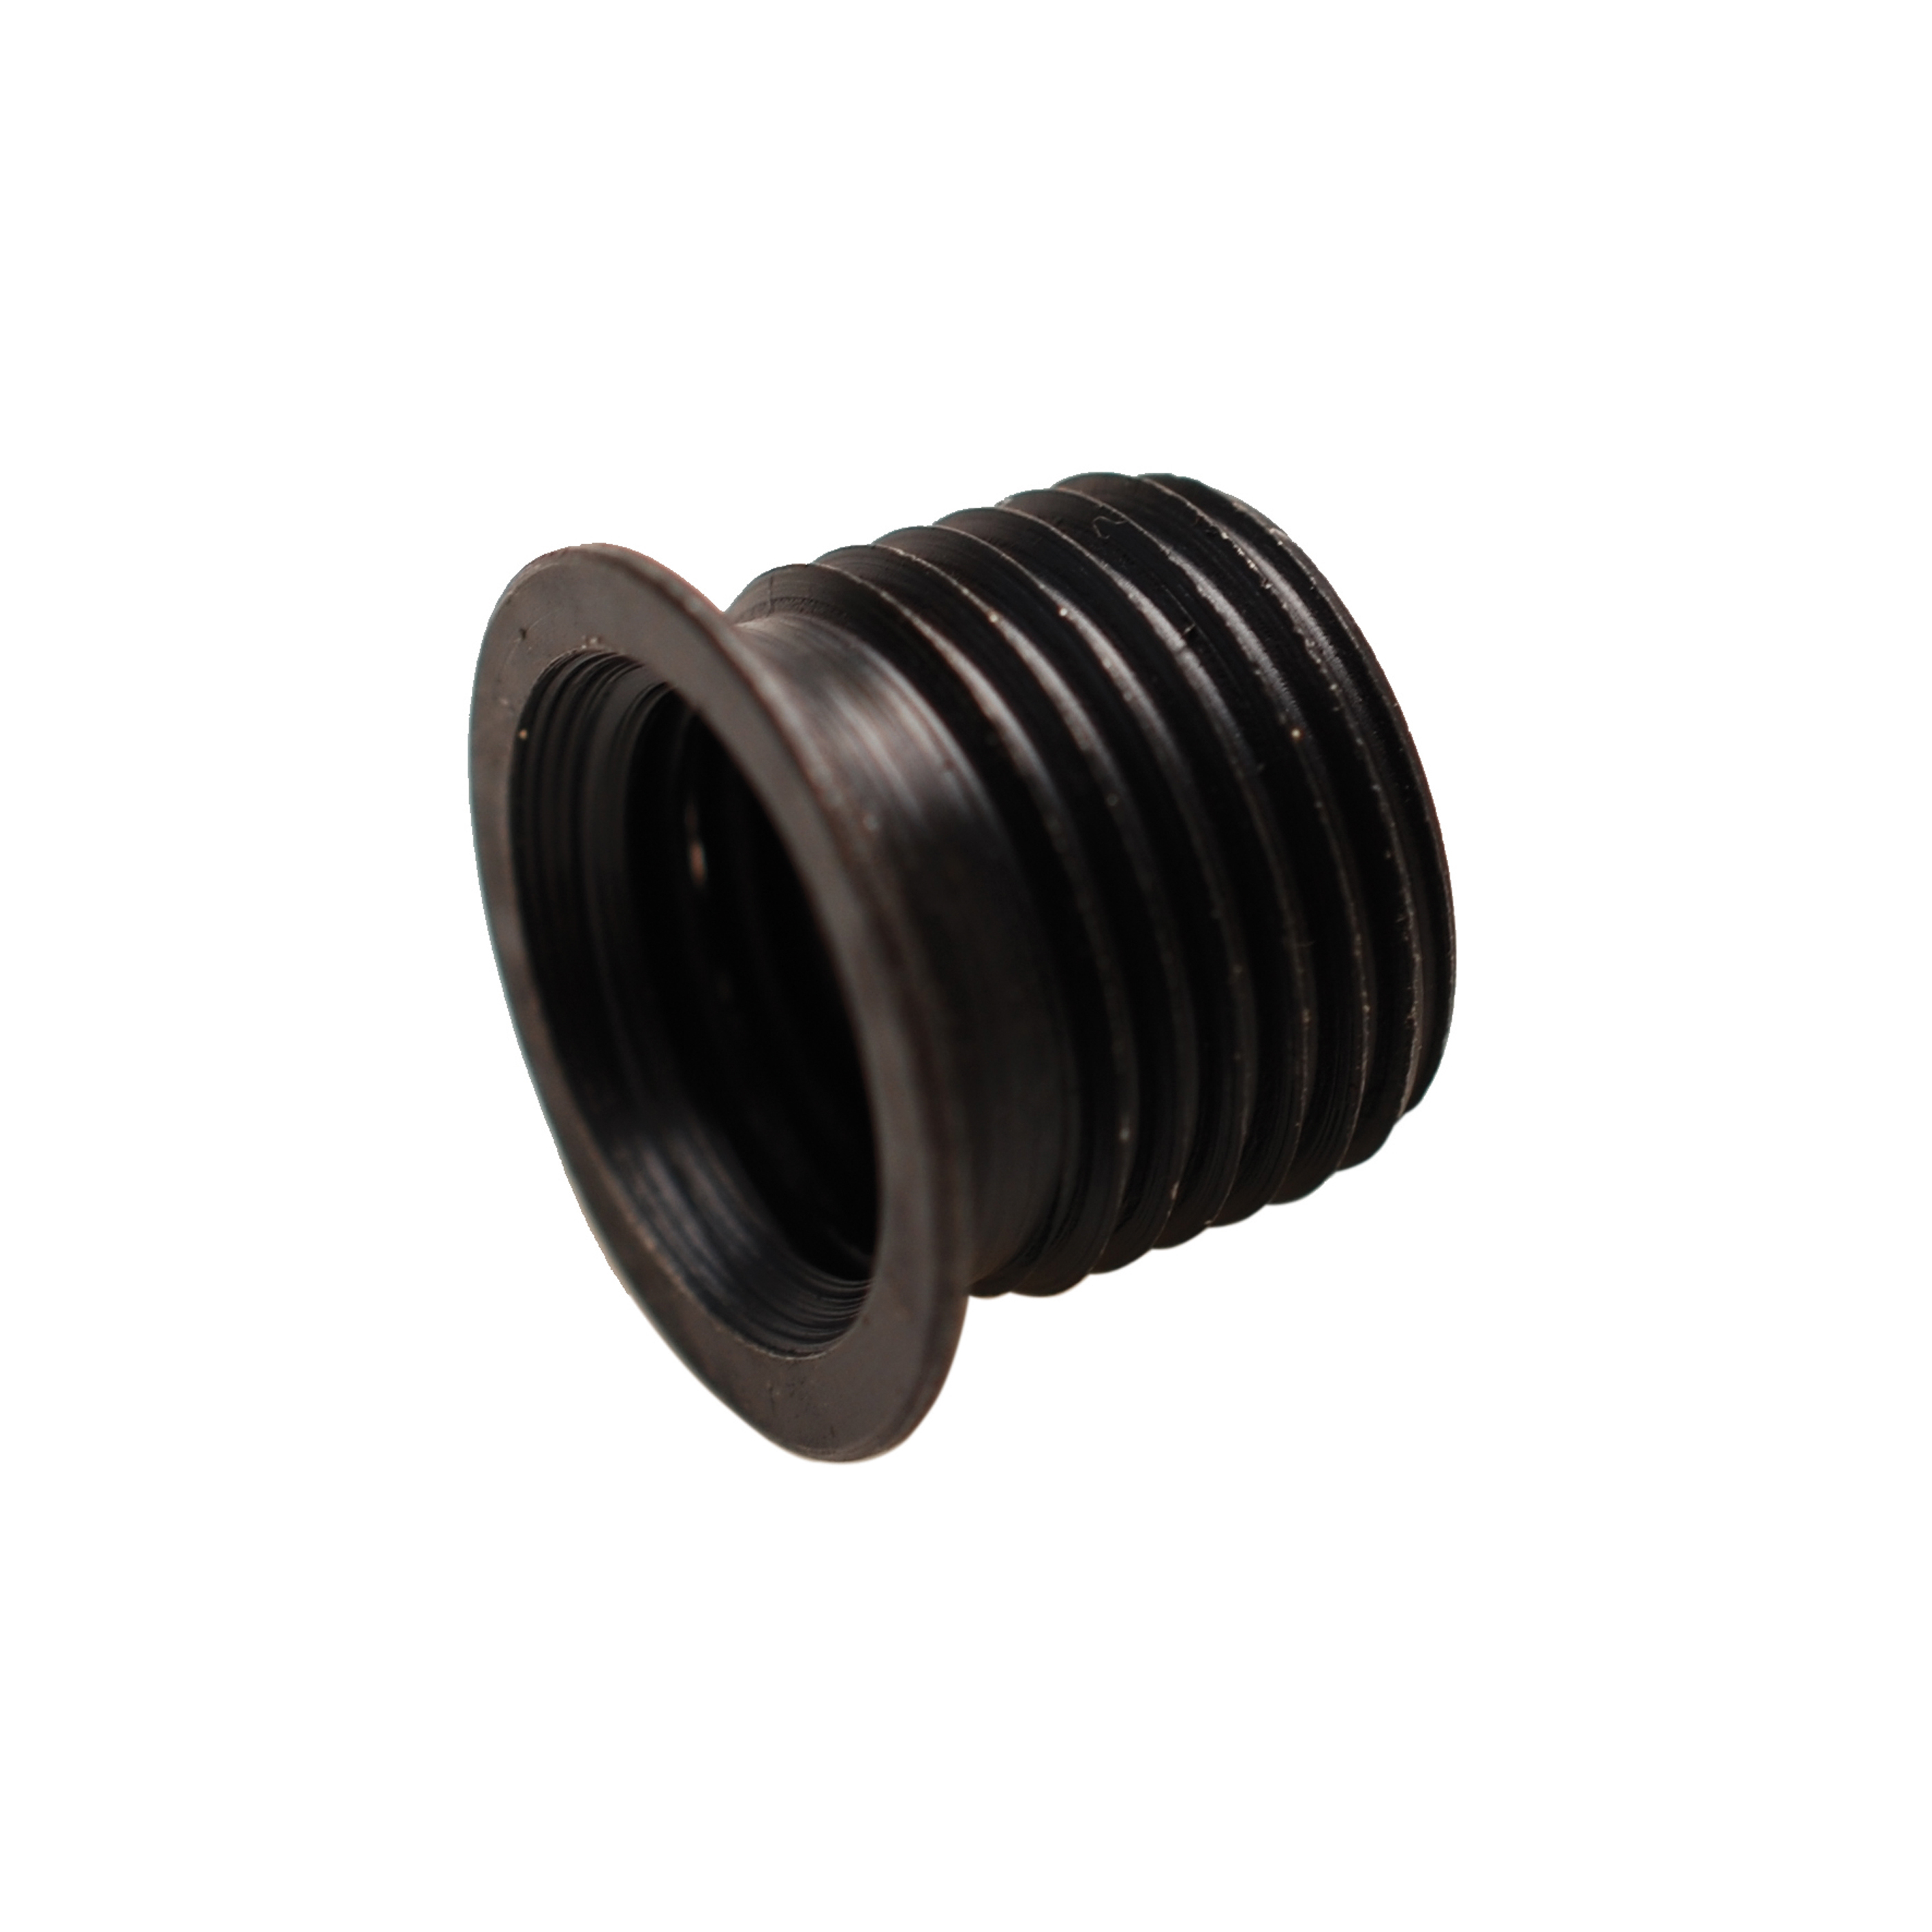 8651-1 12 mm Spark Plug Thread Repair Insert BGS M12 x 1,25 x 12 mm 